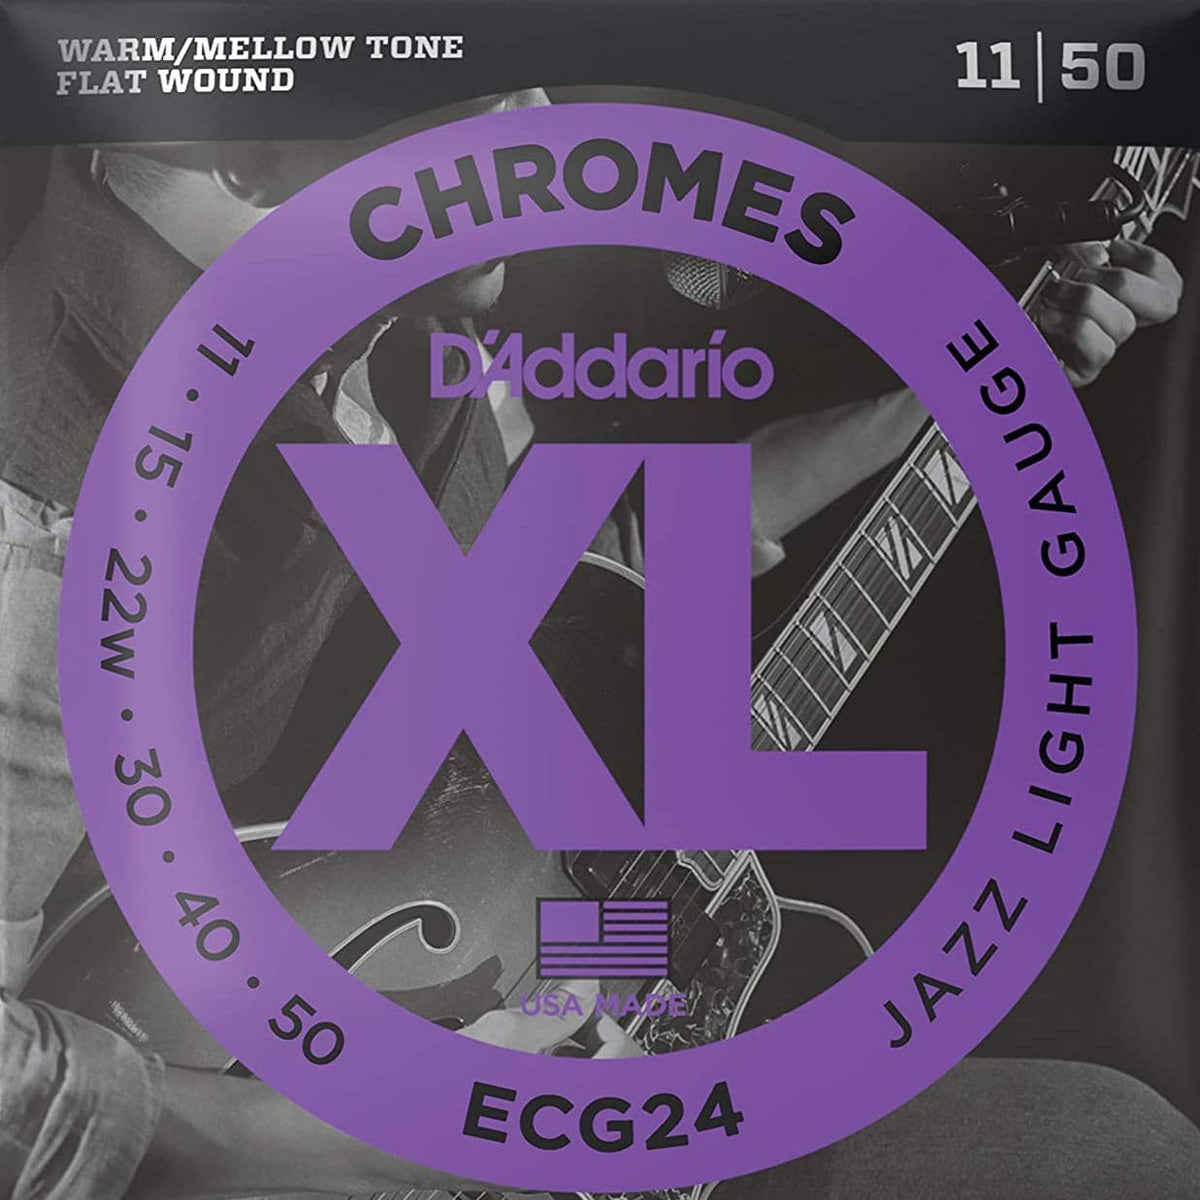 D'Addario ECG24 XL Chromes Flatwound Electric Guitar strings